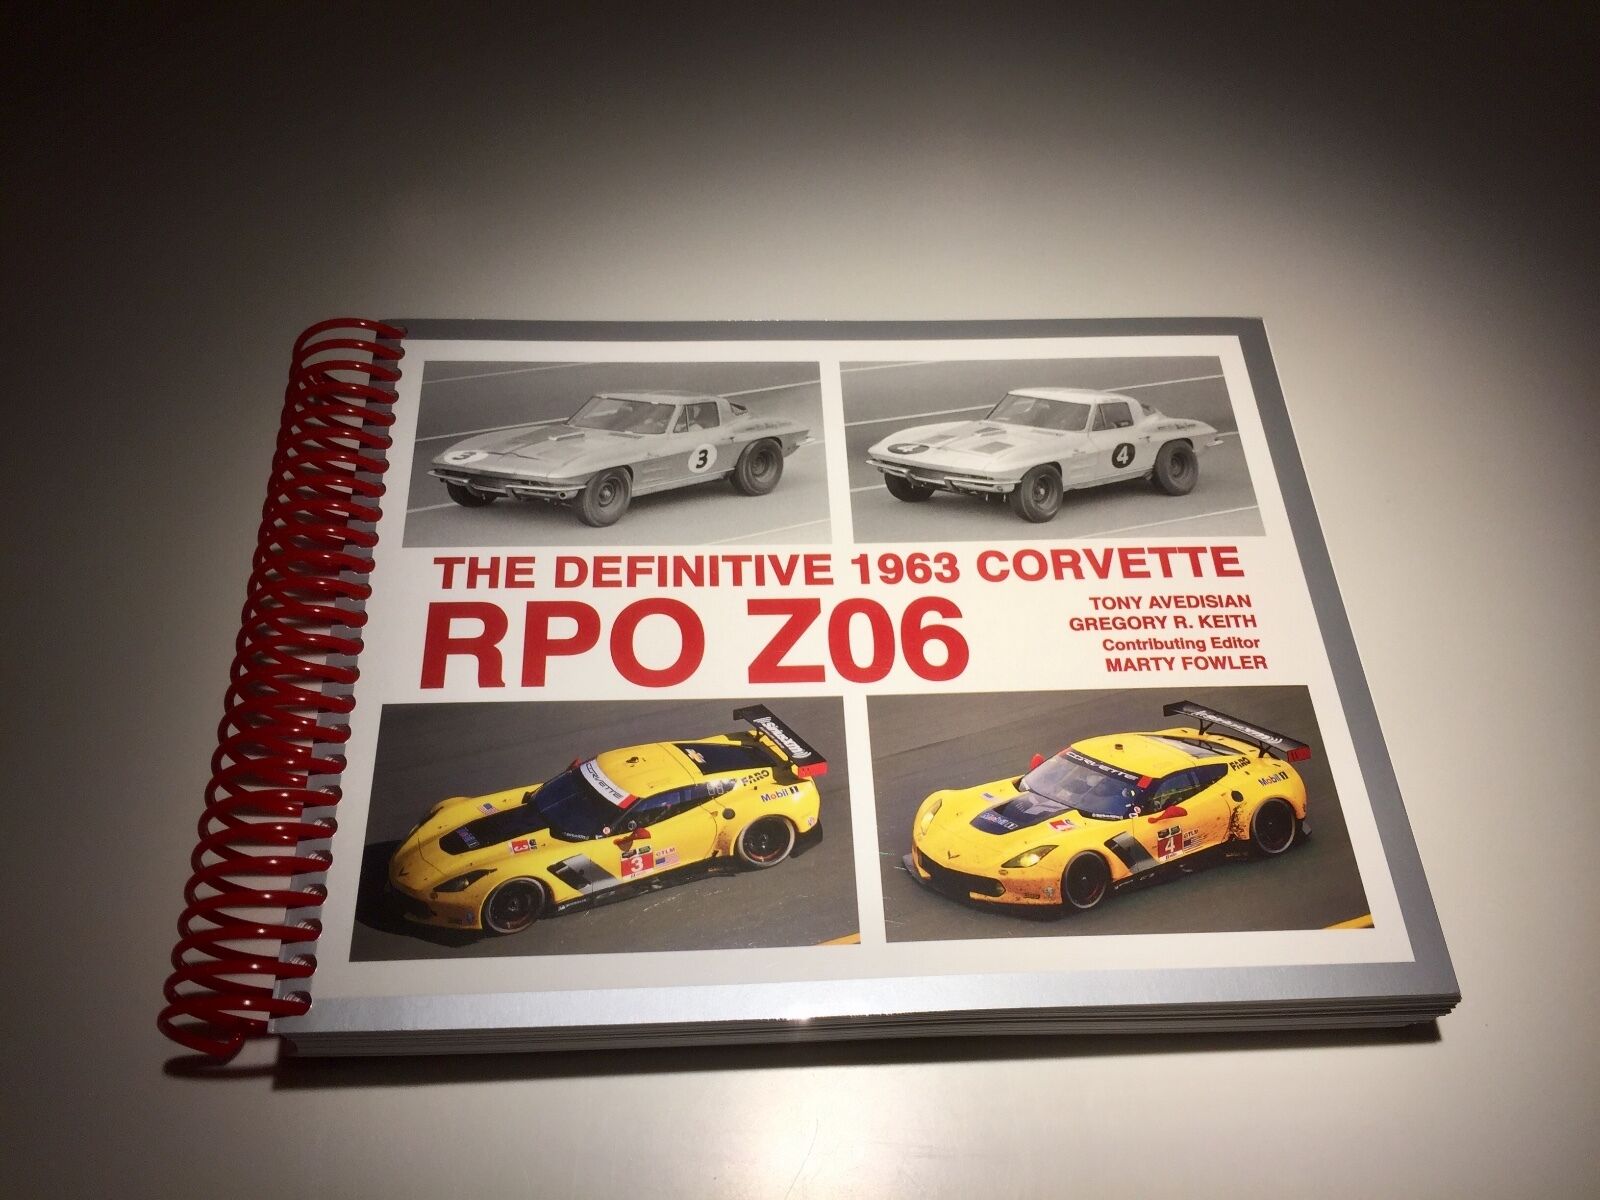 The Definitive 1963 Corvette RPO Z06 - coil bound book - by Tony Avedisian et al